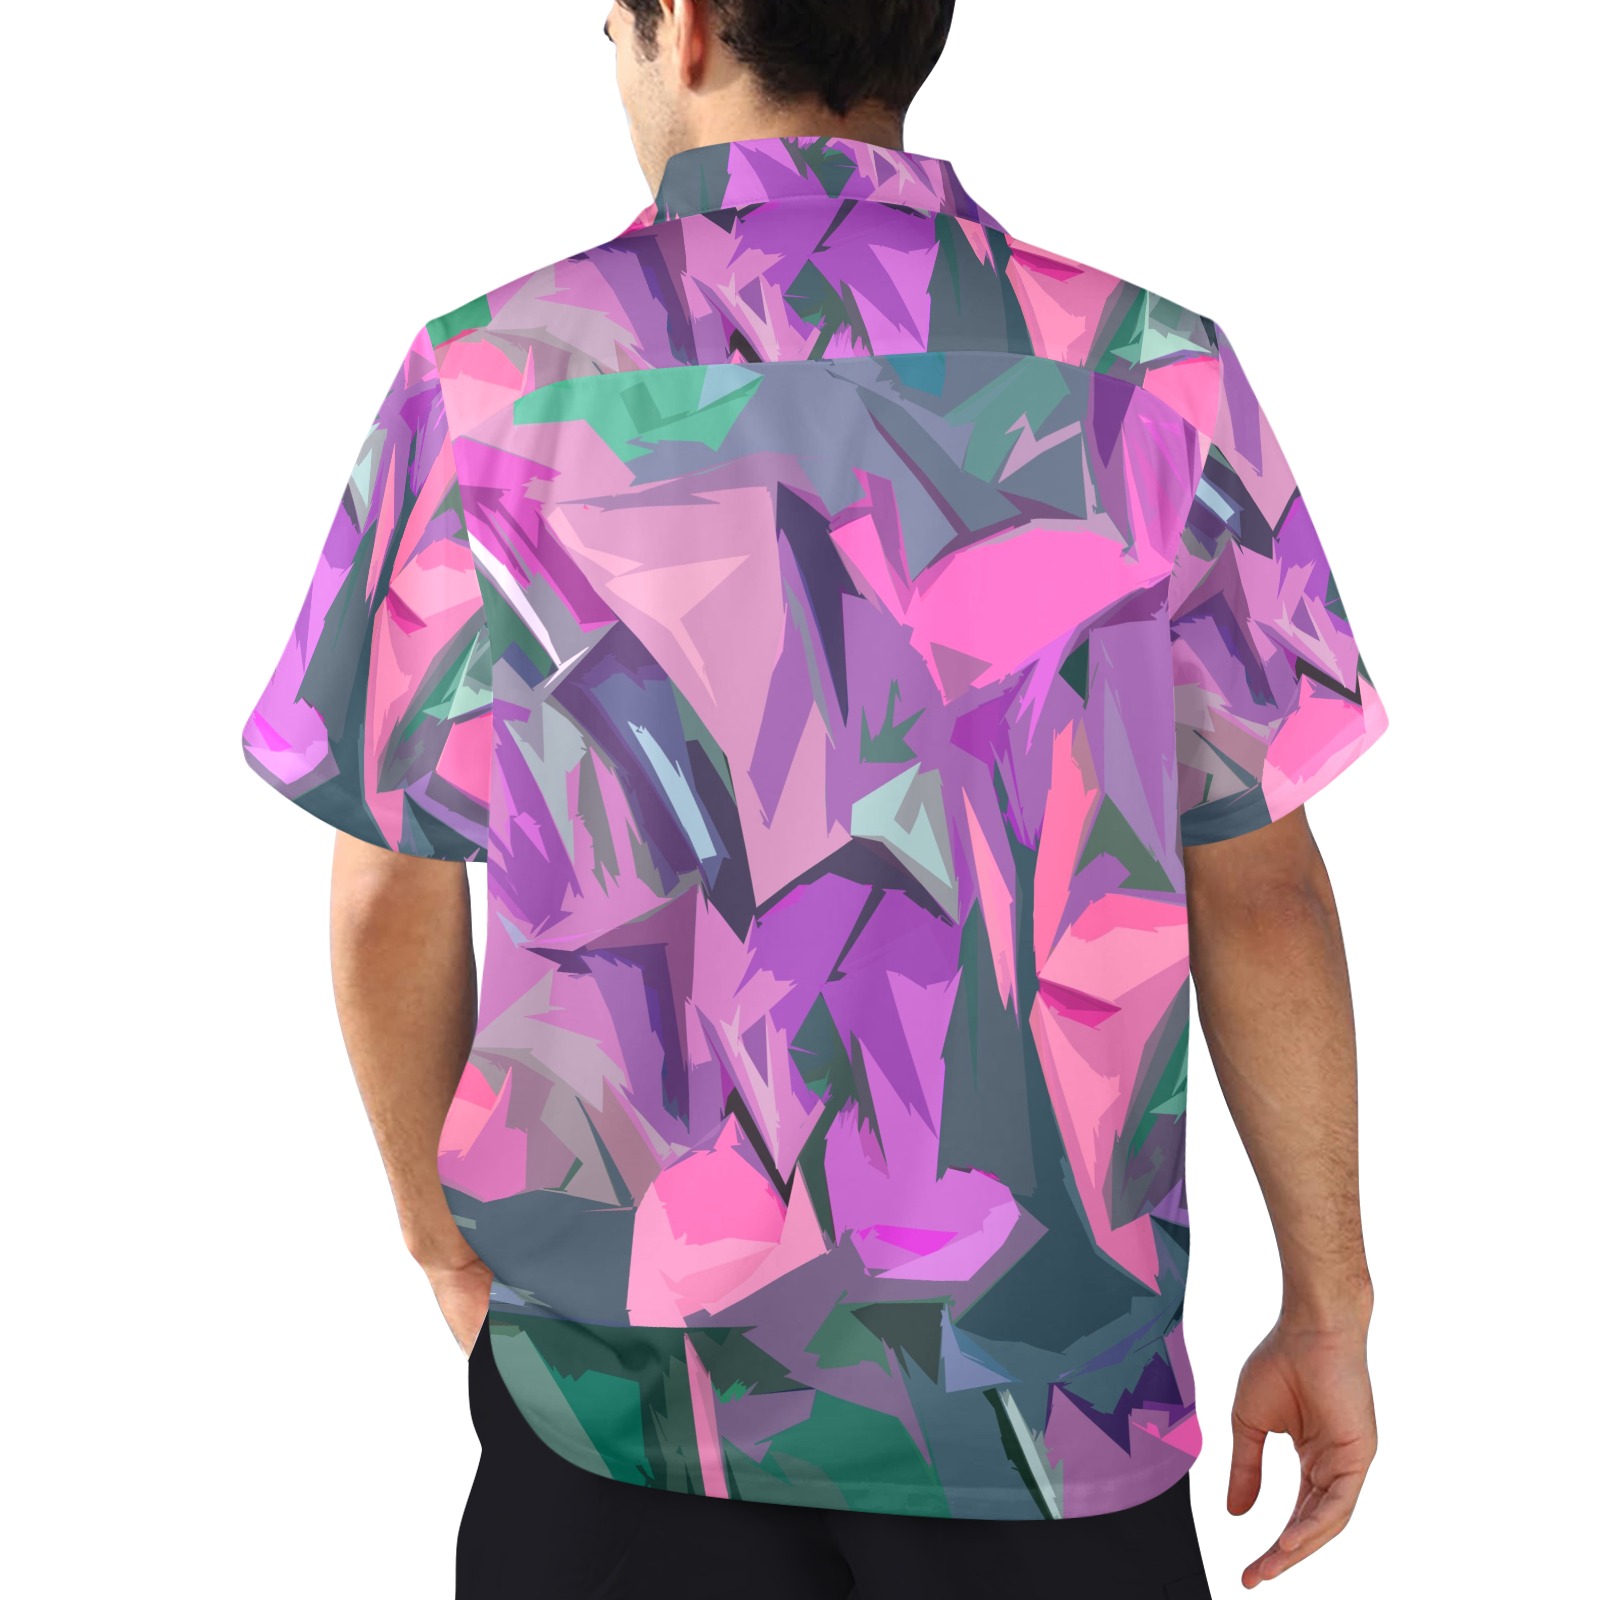 who's looking 34d2 Men's All Over Print Hawaiian Shirt (Model T58)